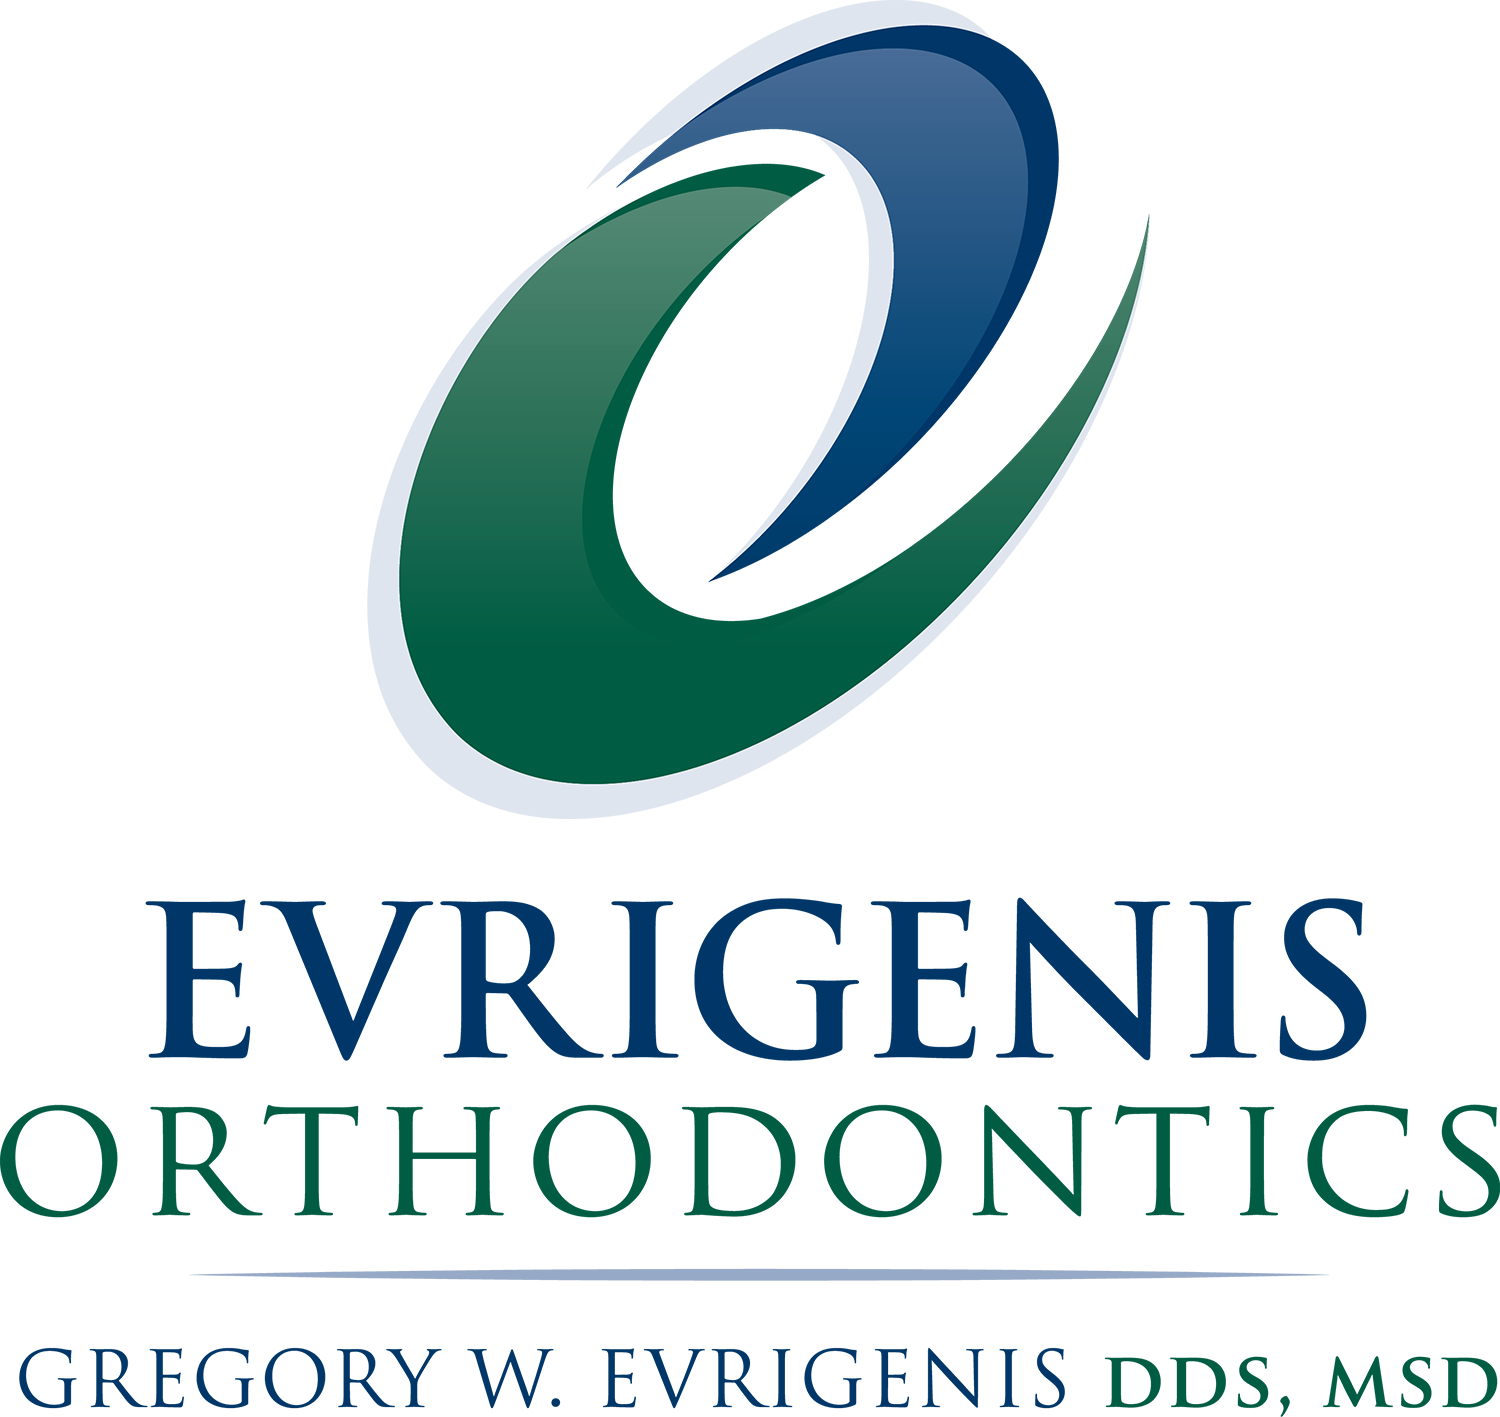 Evrigenis Orthodontics logo